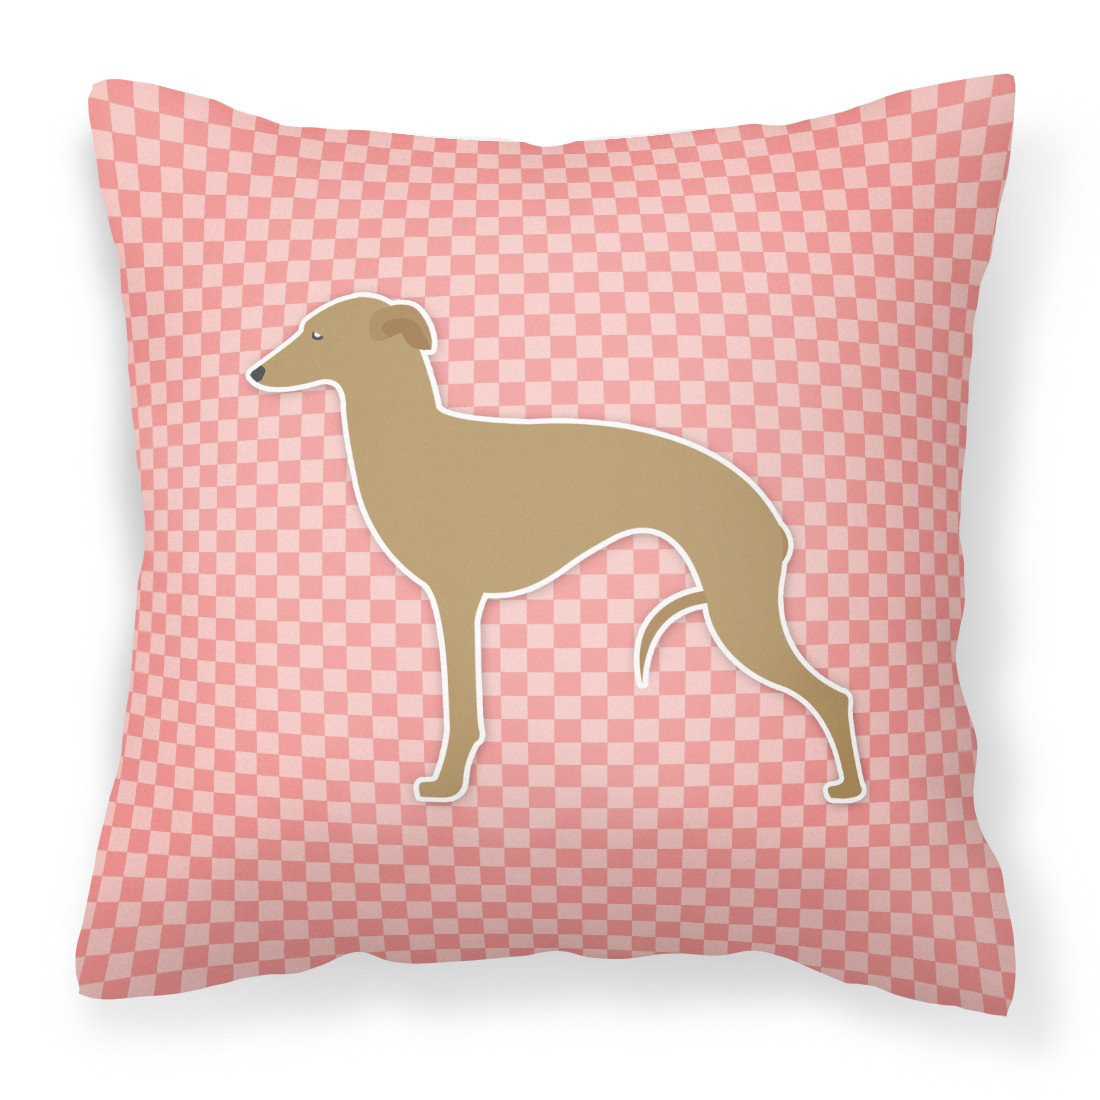 Italian Greyhound Checkerboard Pink Fabric Decorative Pillow BB3614PW1818 by Caroline's Treasures